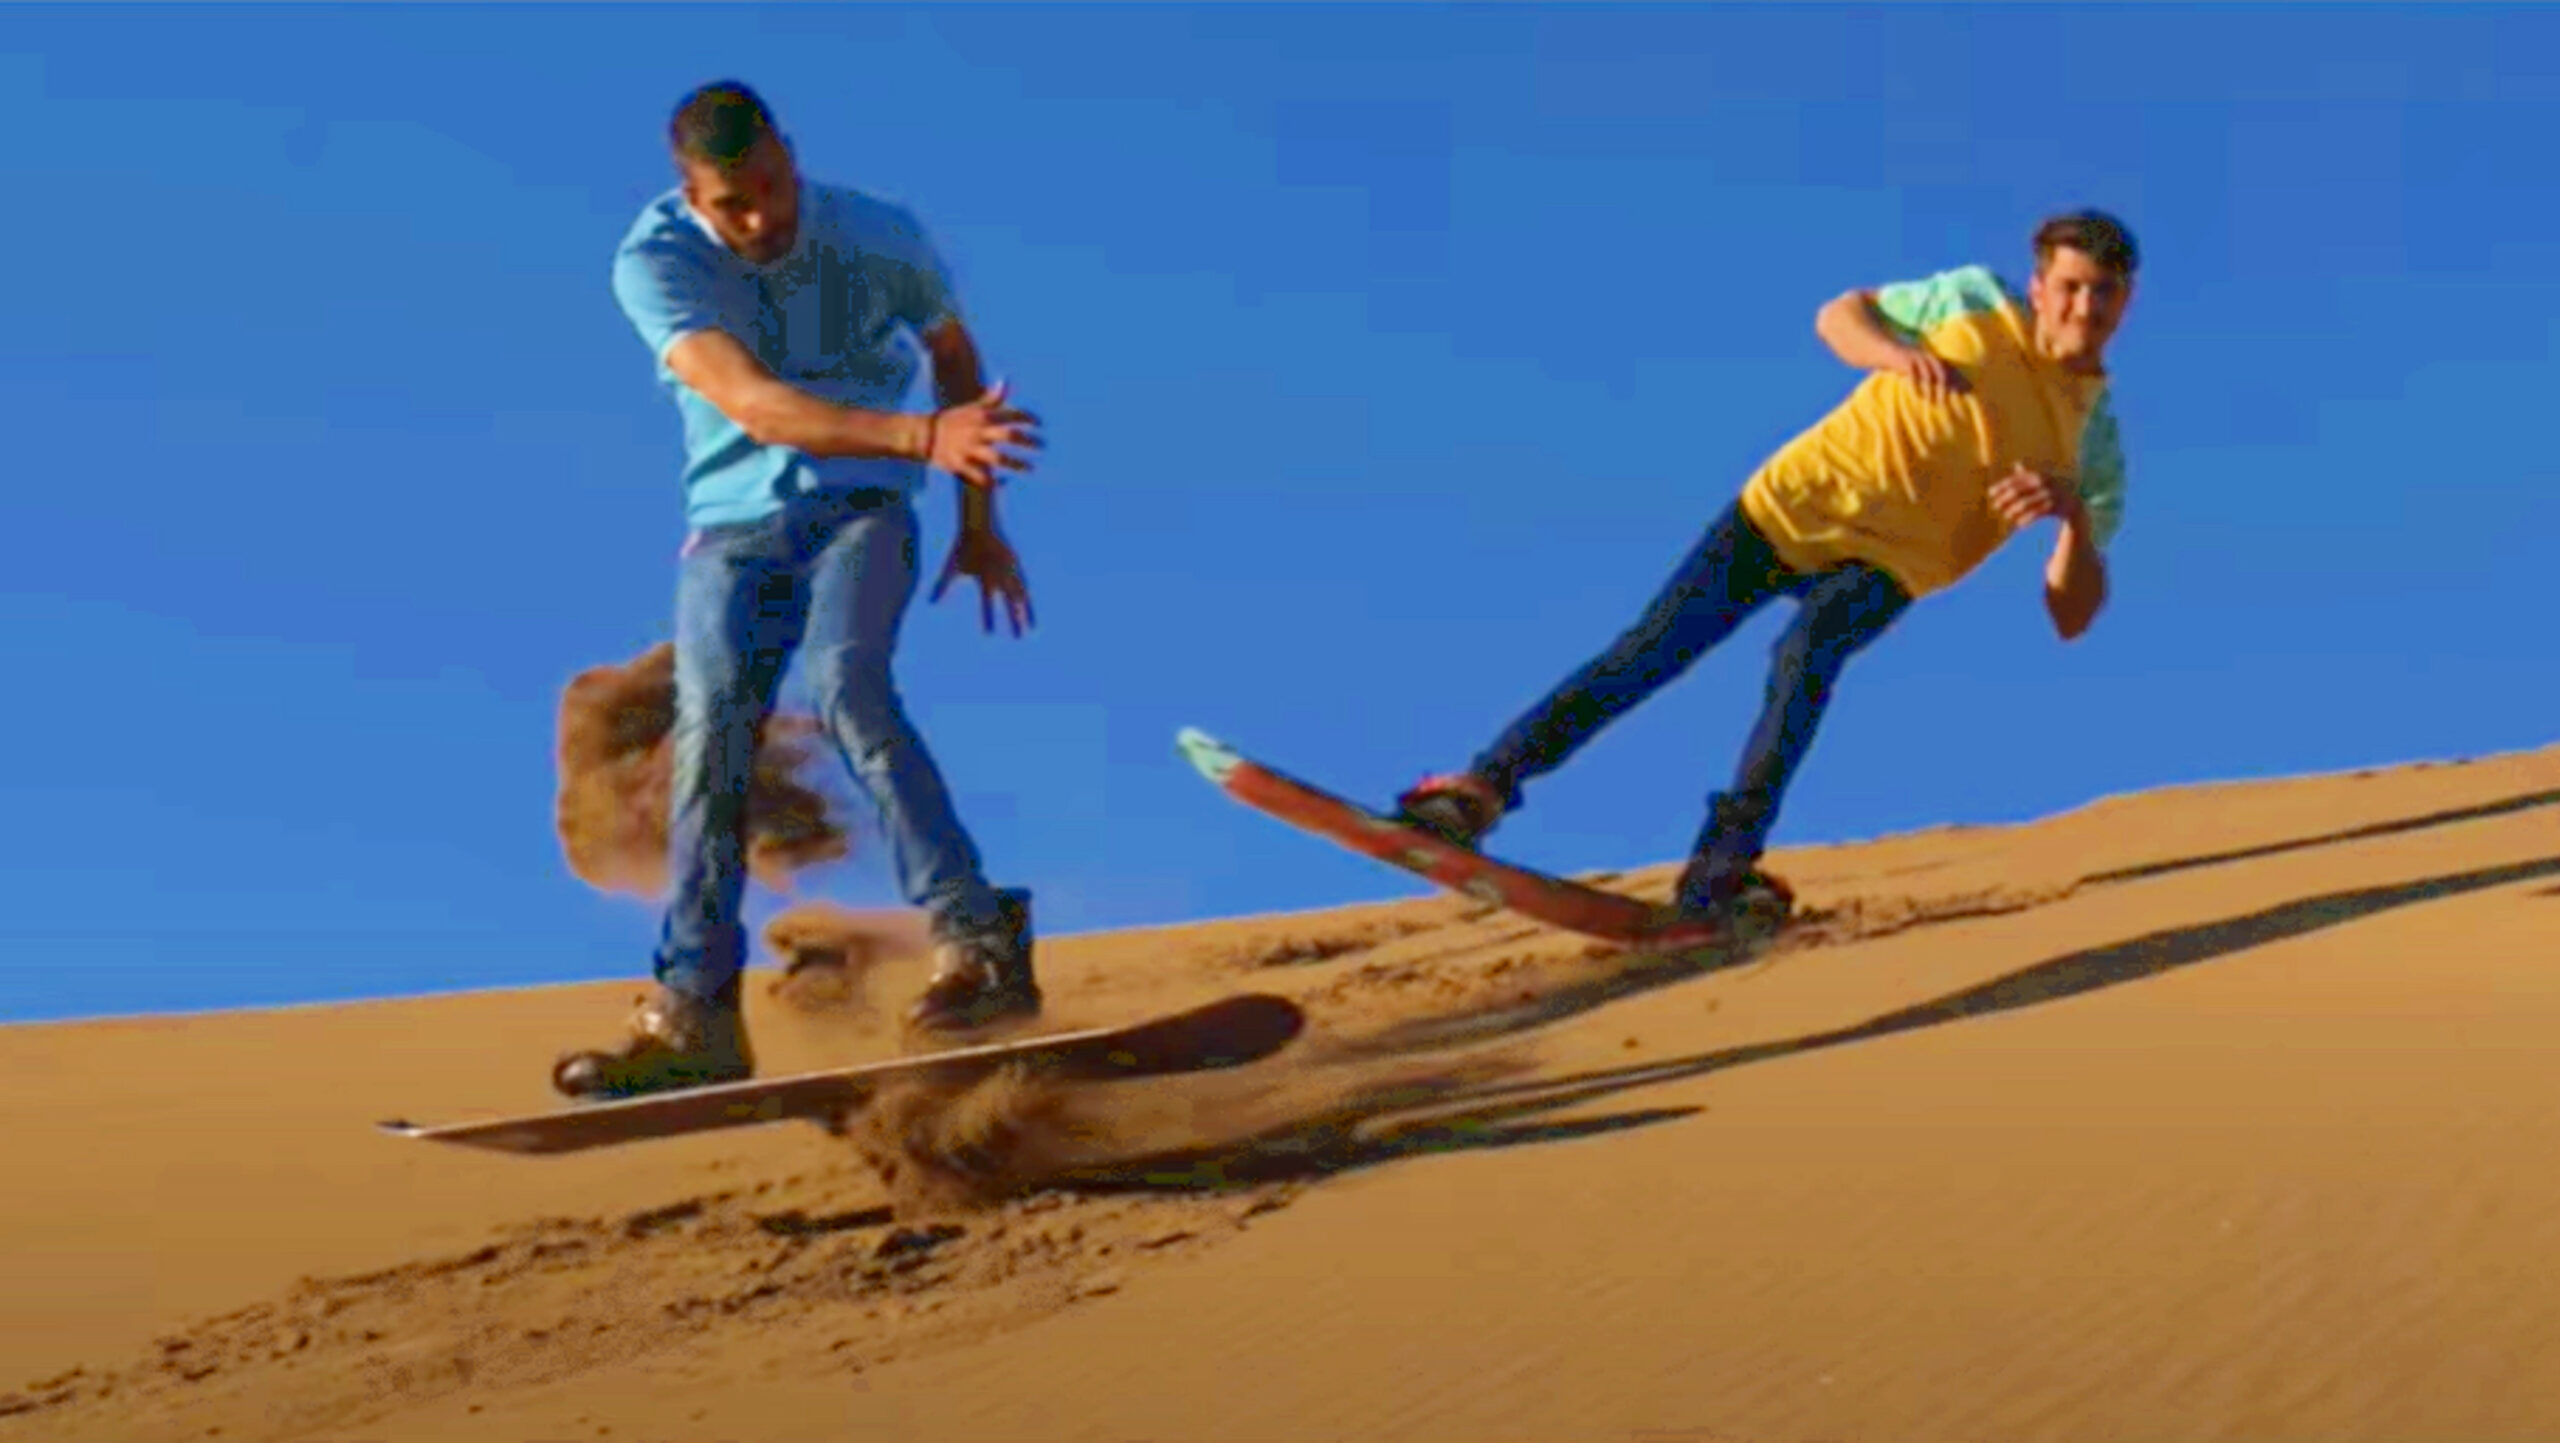 Sandboarding Gomati pješčane dine. Lemnos, Grčka